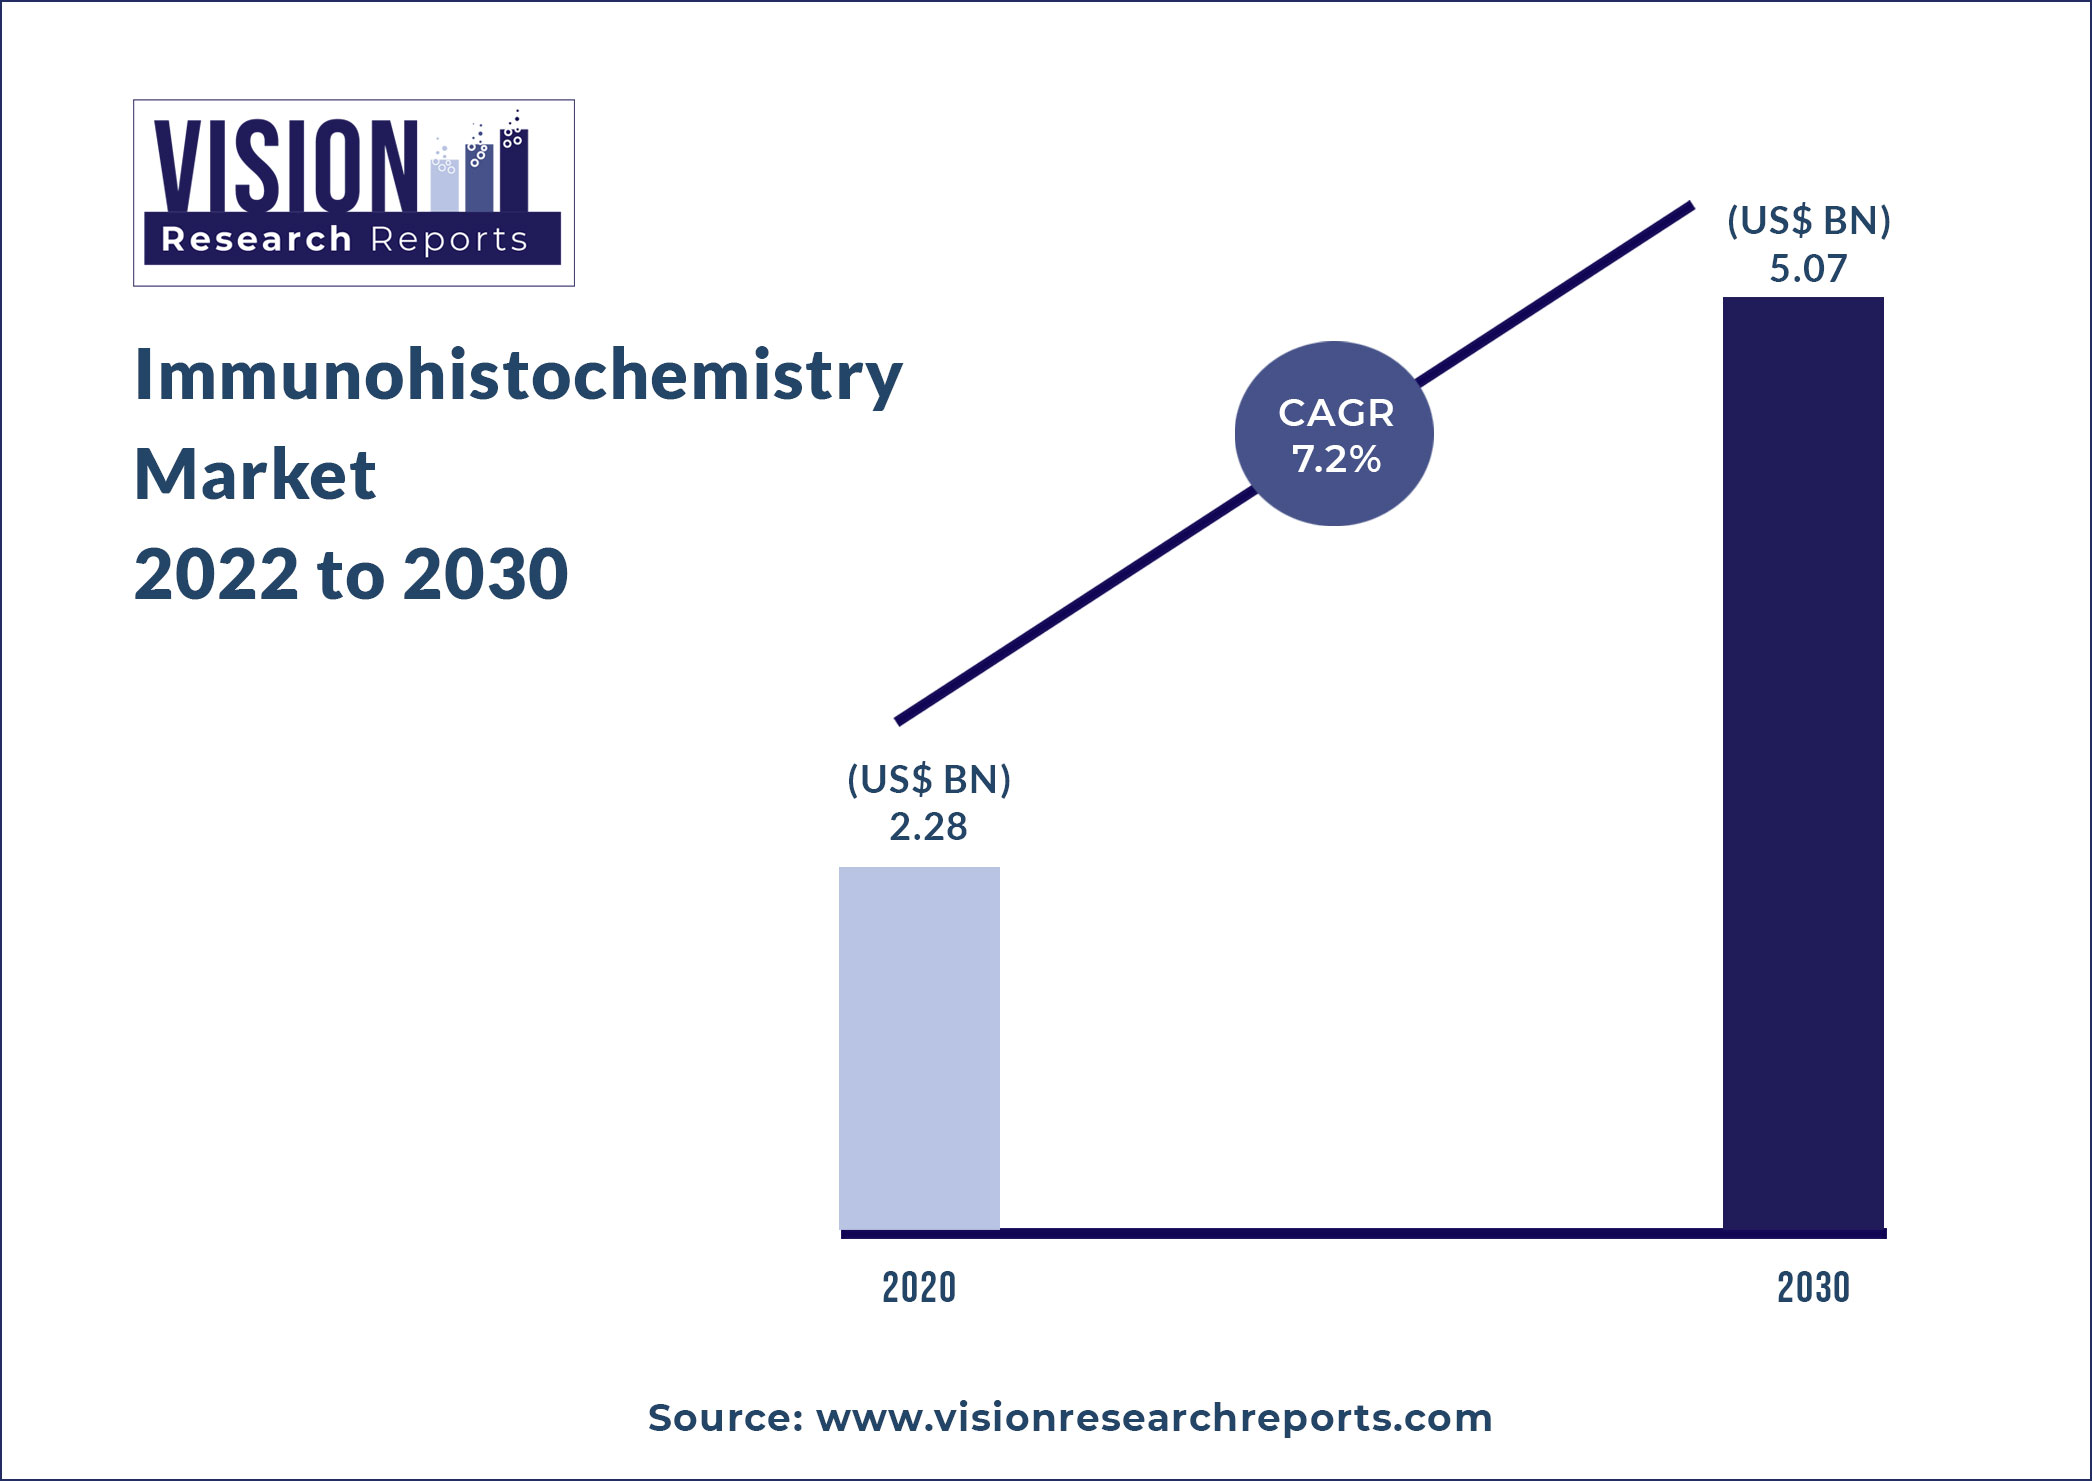 Immunohistochemistry Market Size 2022 to 2030